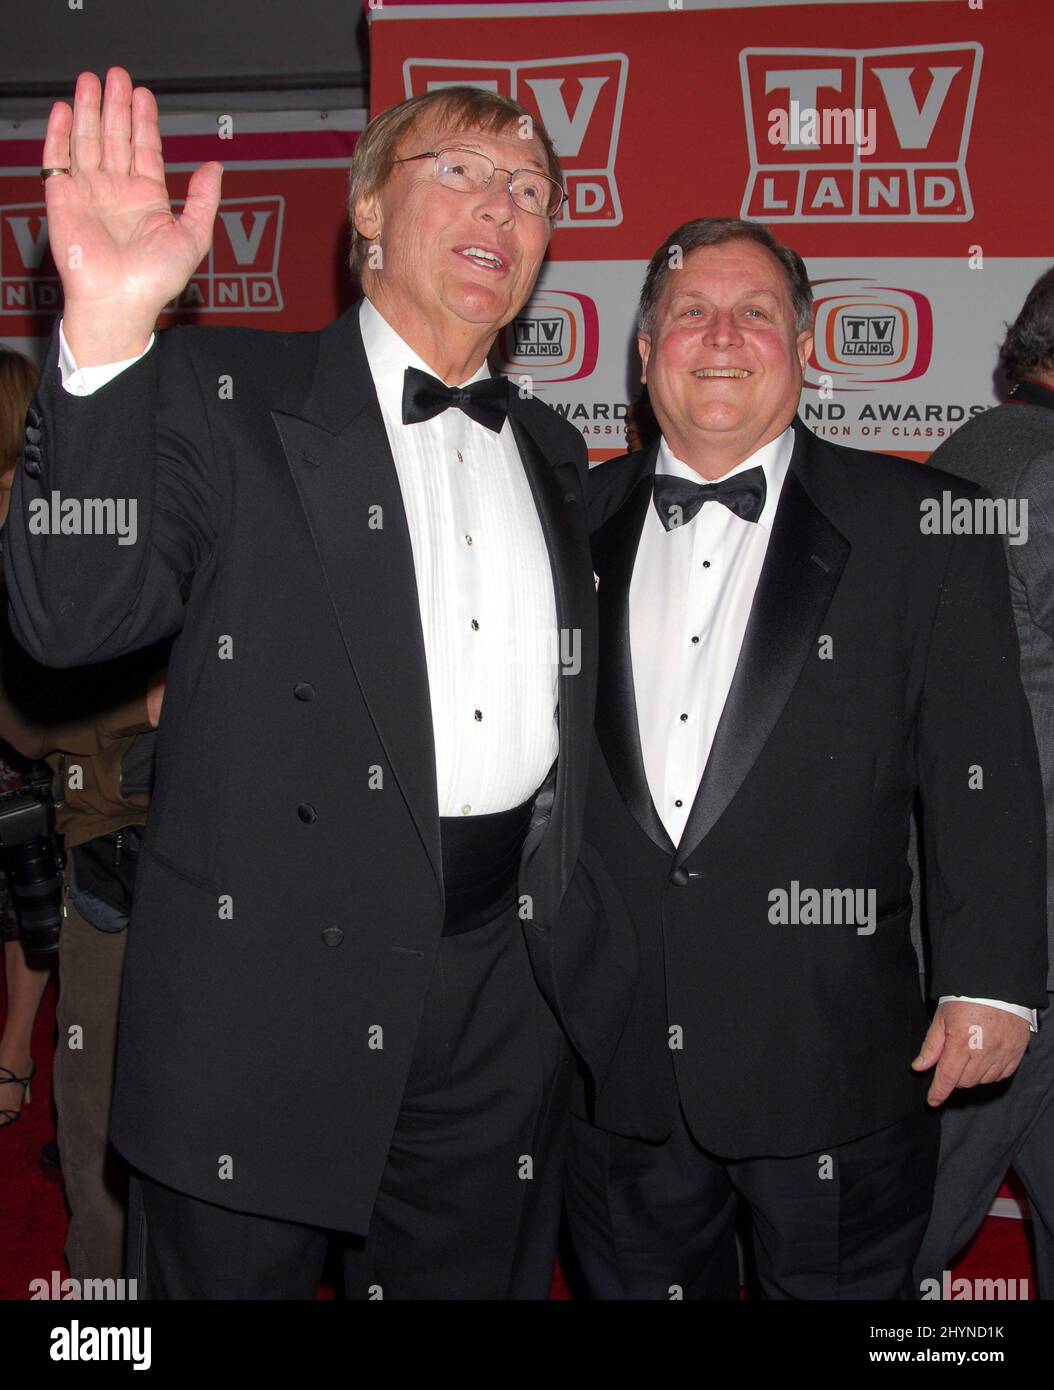 Adam West e Burt Ward partecipano ai 2006 TV Land Awards di Santa Monica. Foto: UK Stampa Foto Stock